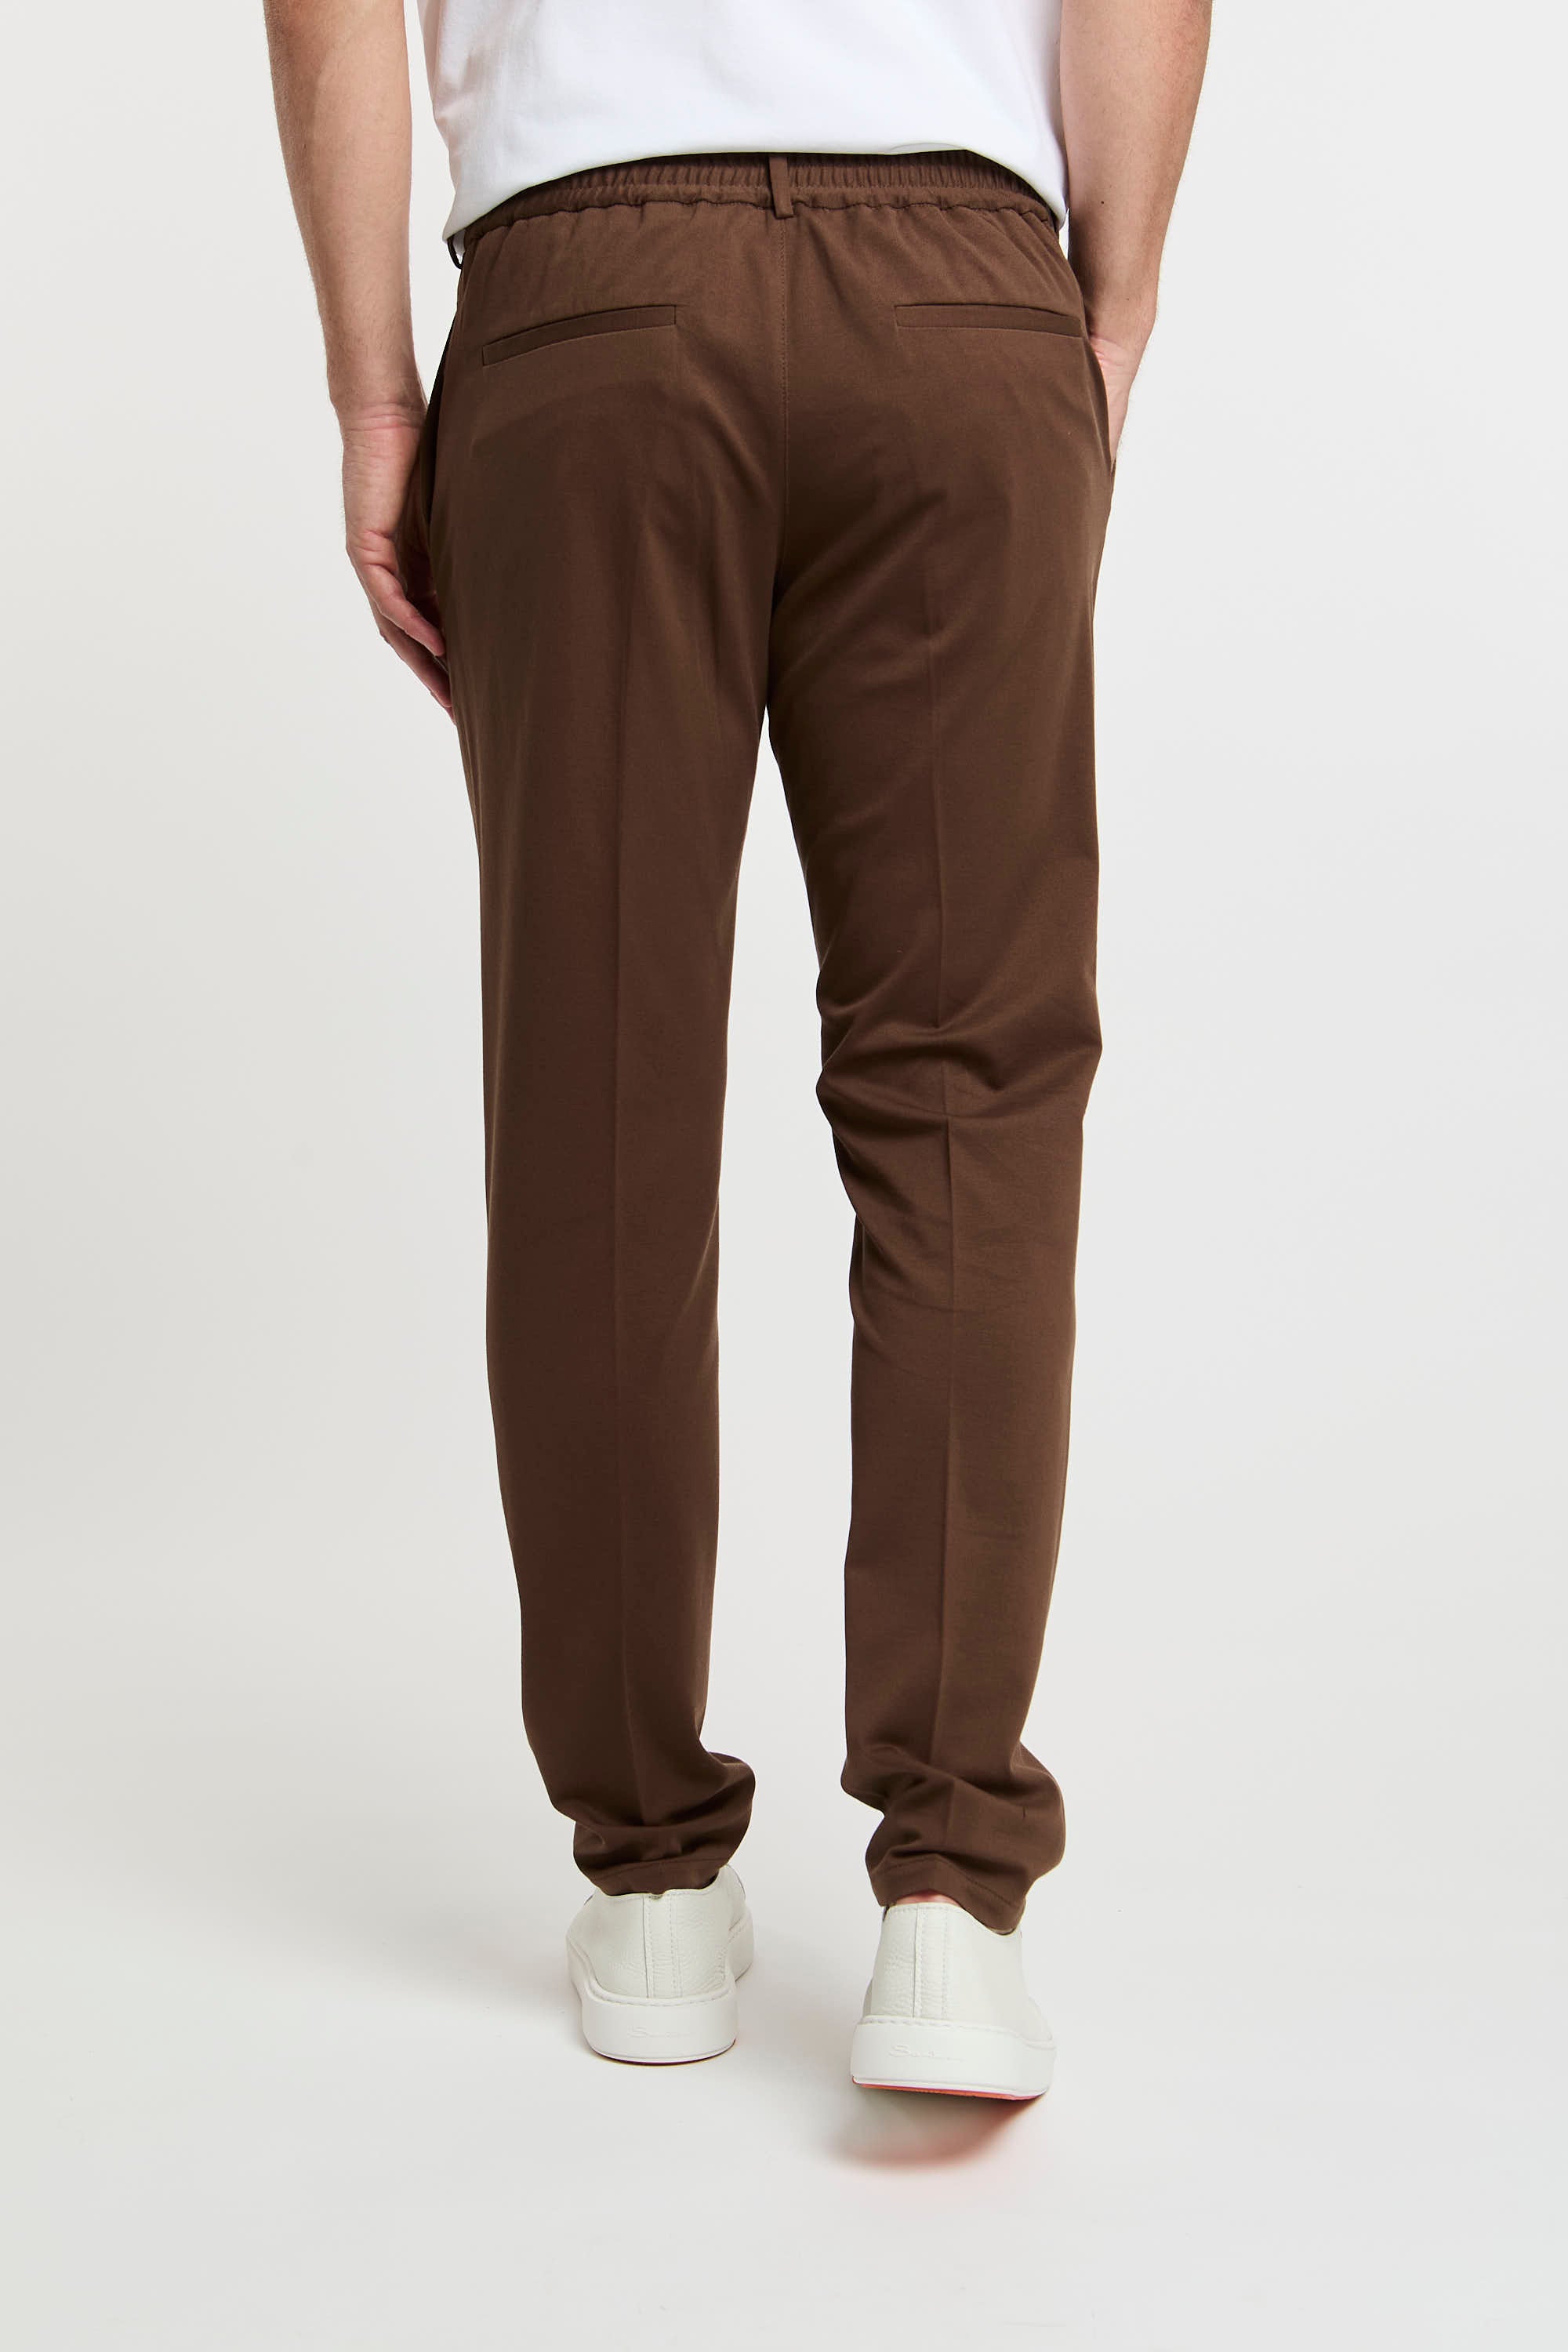 Circolo 1901 Cotton Trousers Brown-5